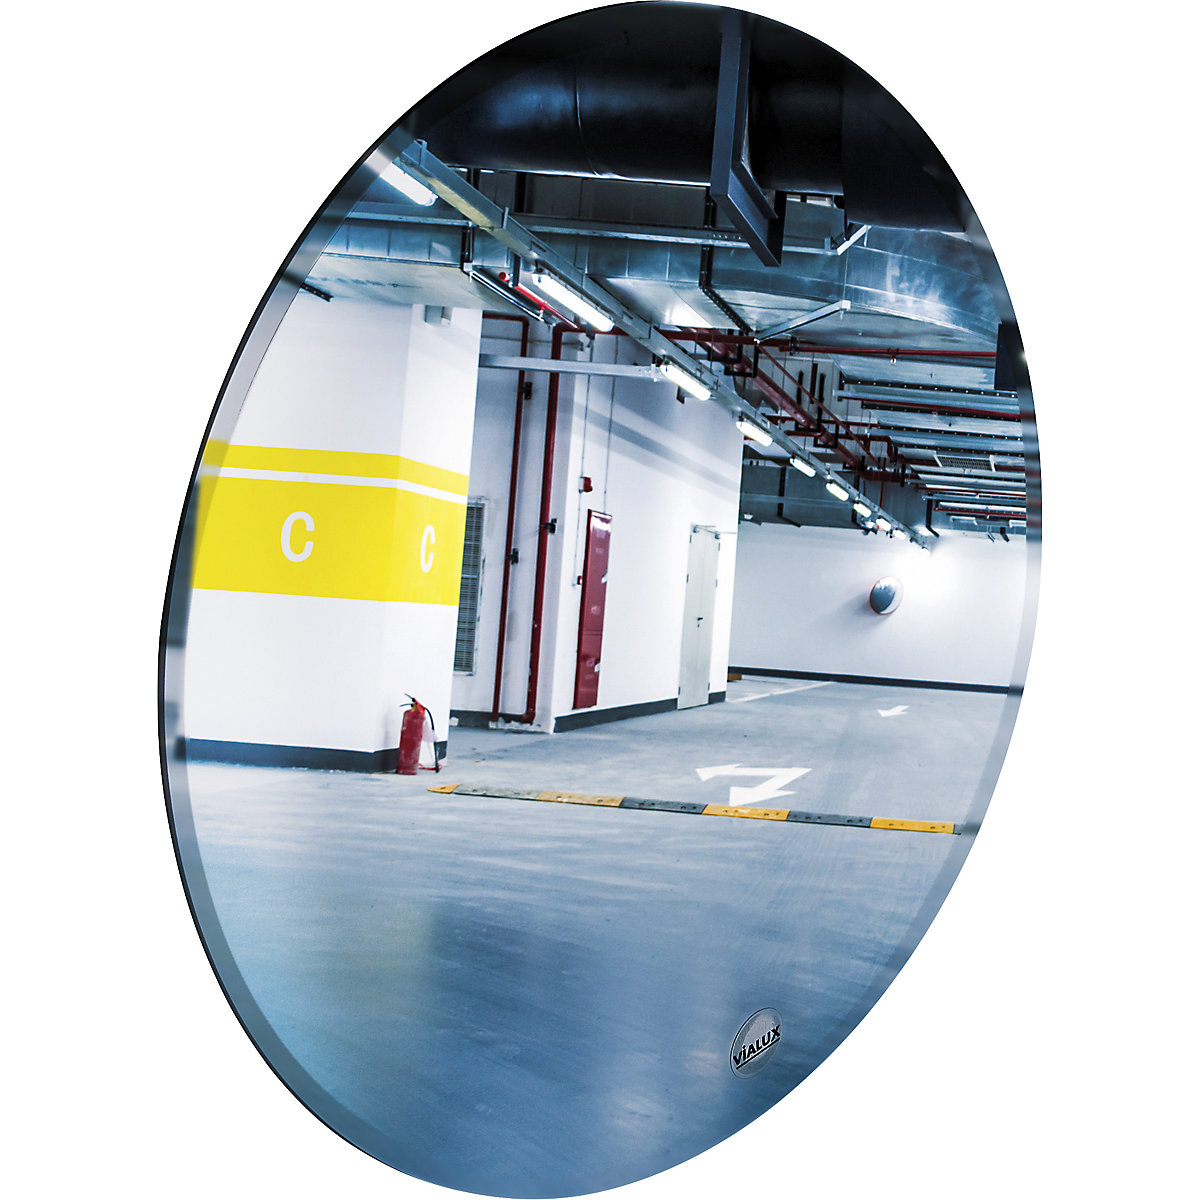 Garage driveway mirror – Vialux